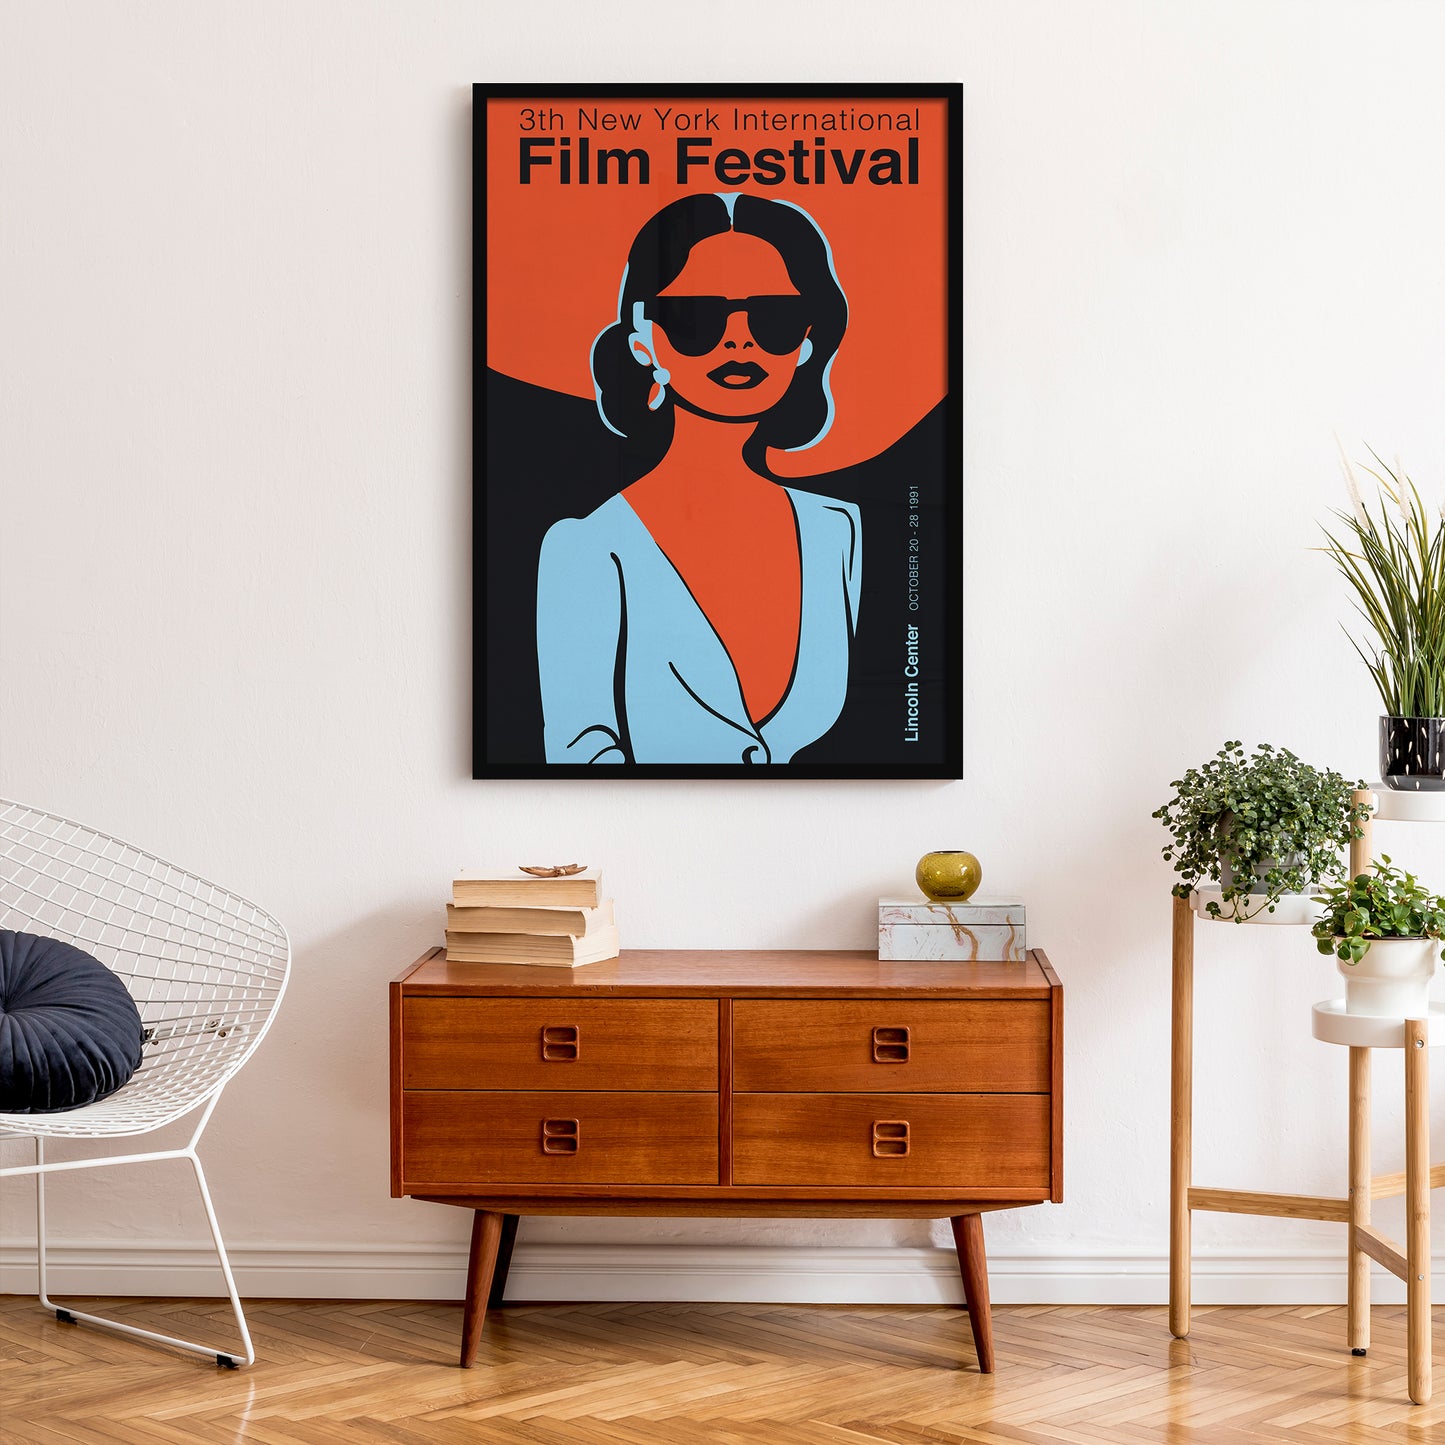 New York Film Festival NYC Movie Poster